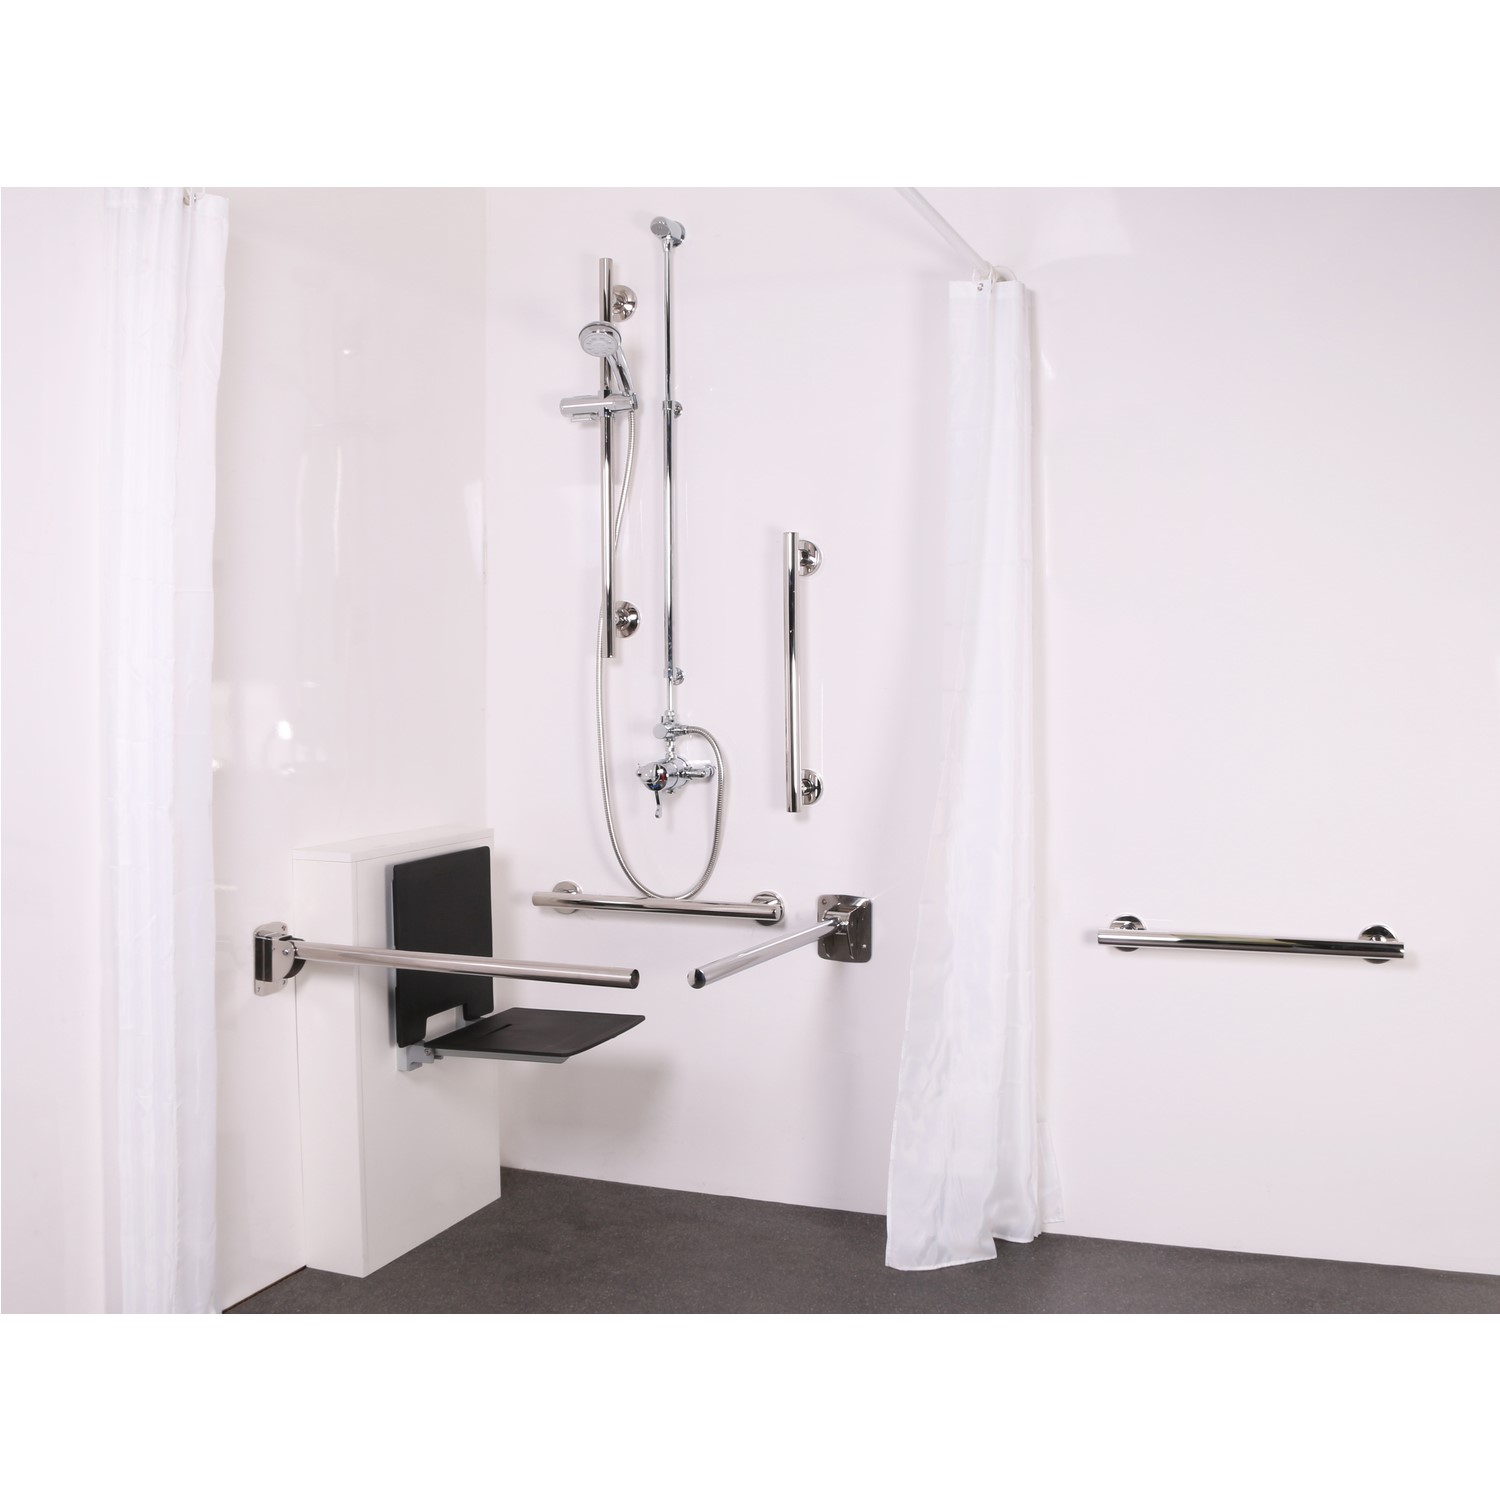 Exposed valve Doc M shower pack stainless steel luxury grab rails slimline shower seat polished